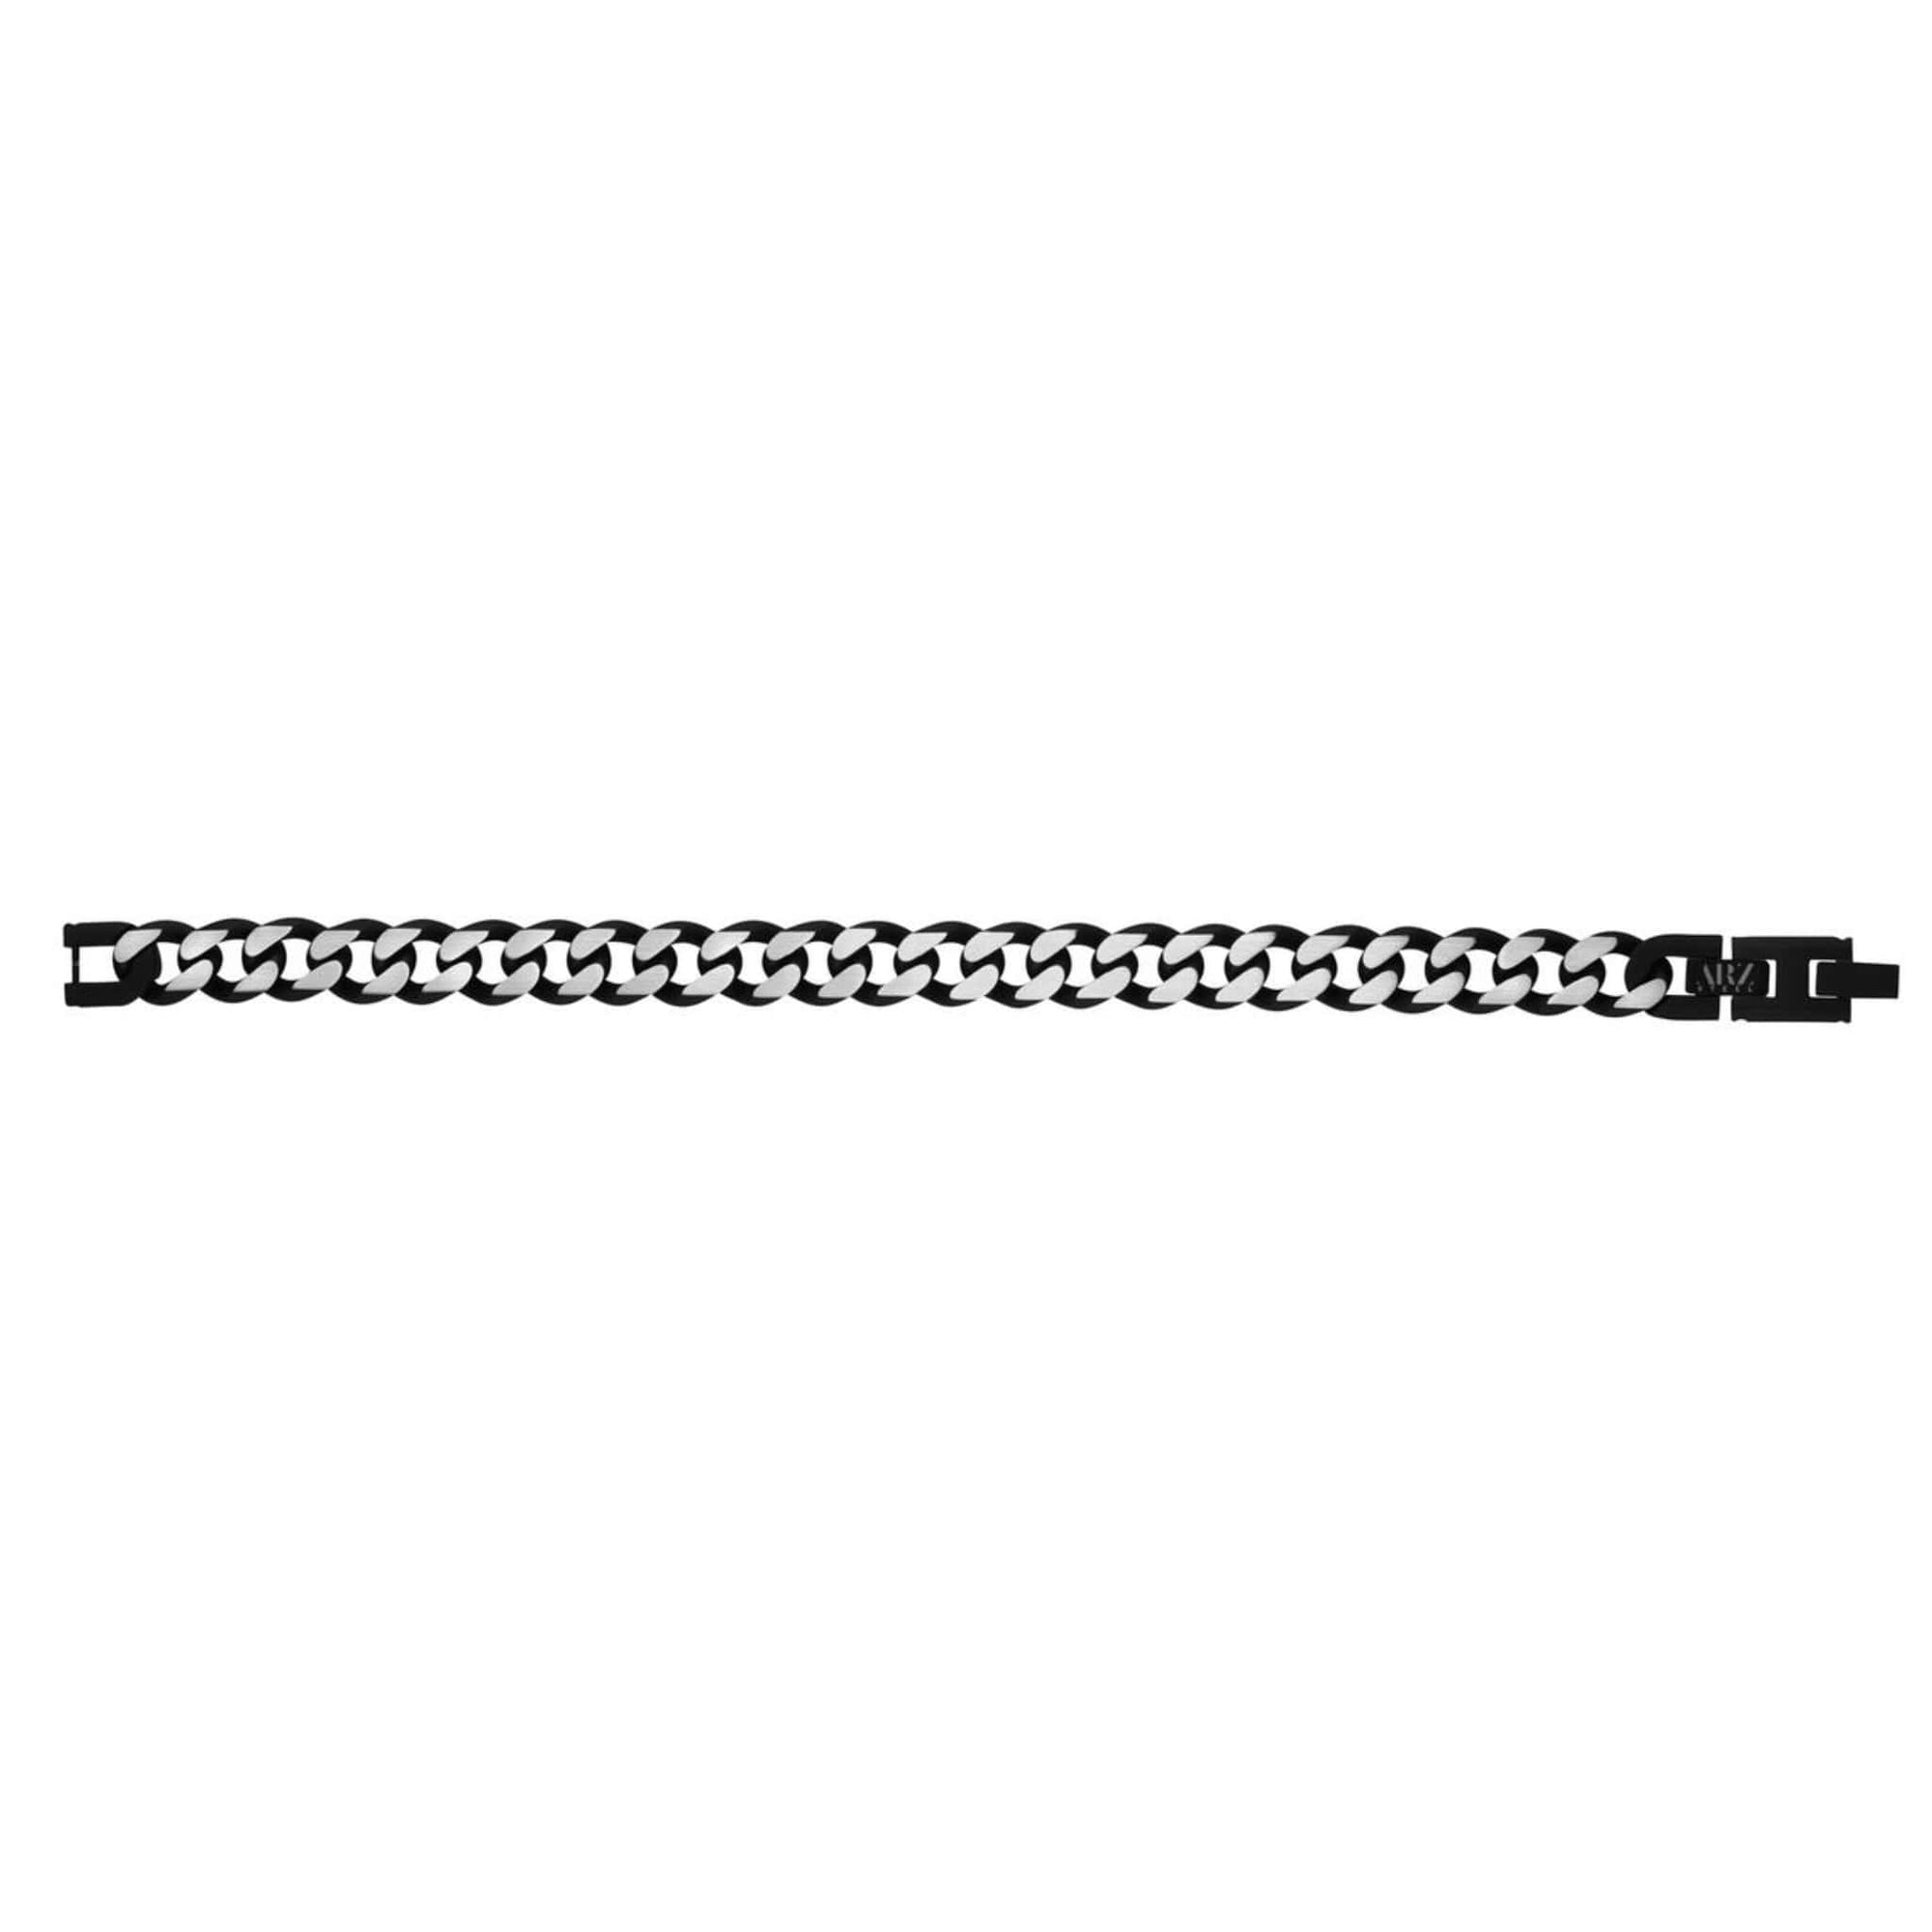 11mm Black & Steel Cuban Link Bracelet at Arman's Jewellers 